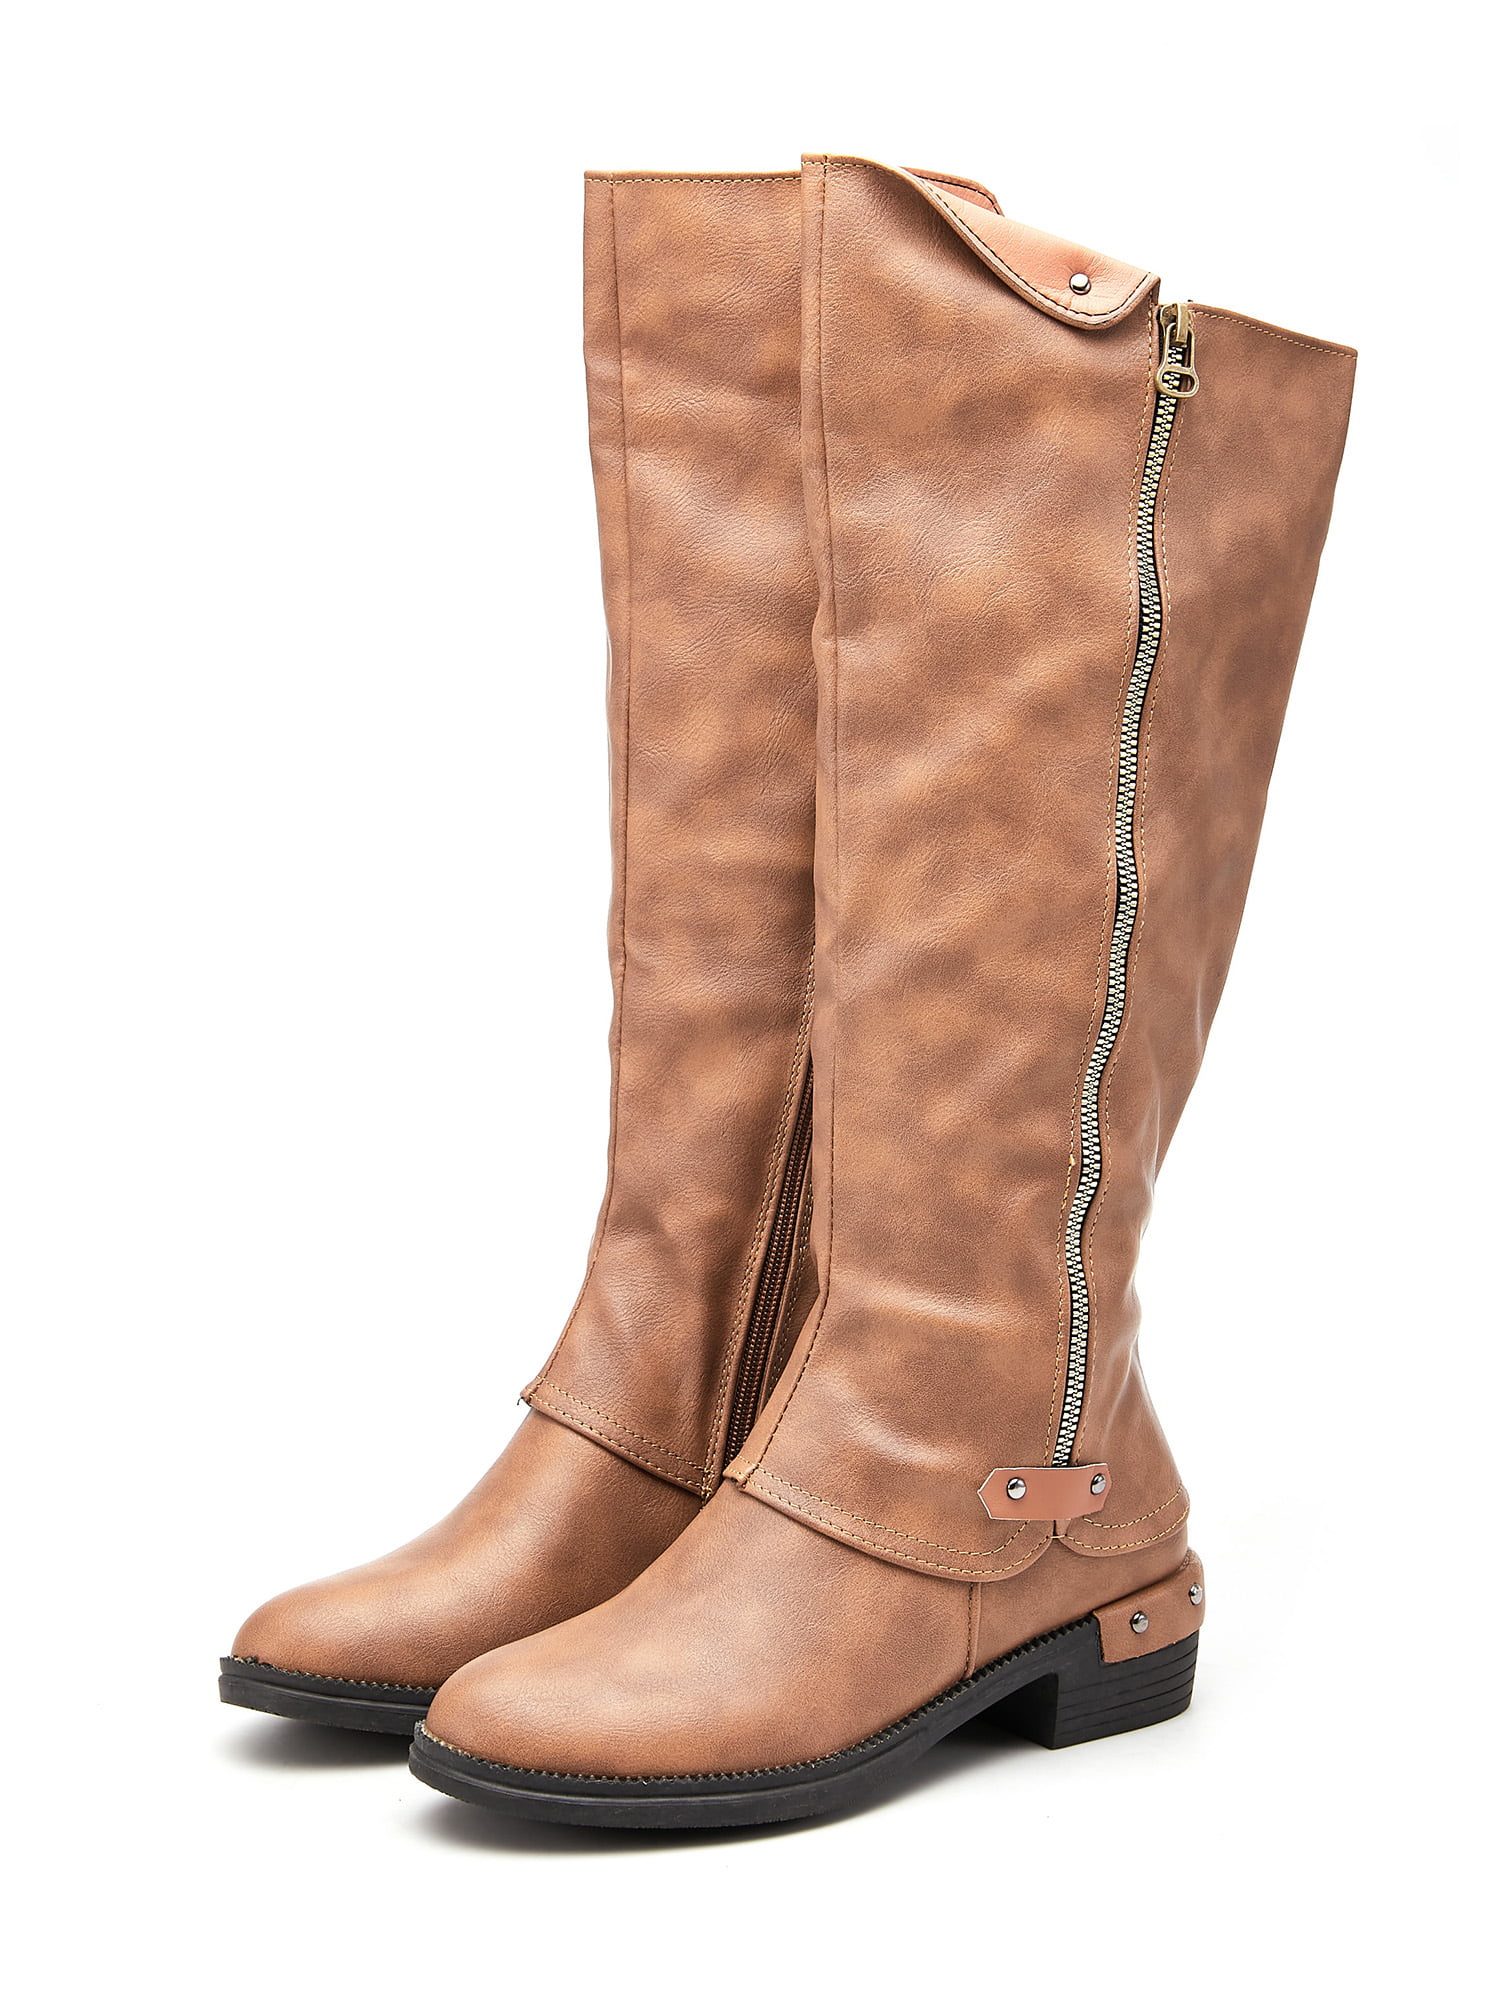 Women's Zipper Boots Low Flat Heel Riding Mid-Calf Boot Comfort Shoes Fashion 